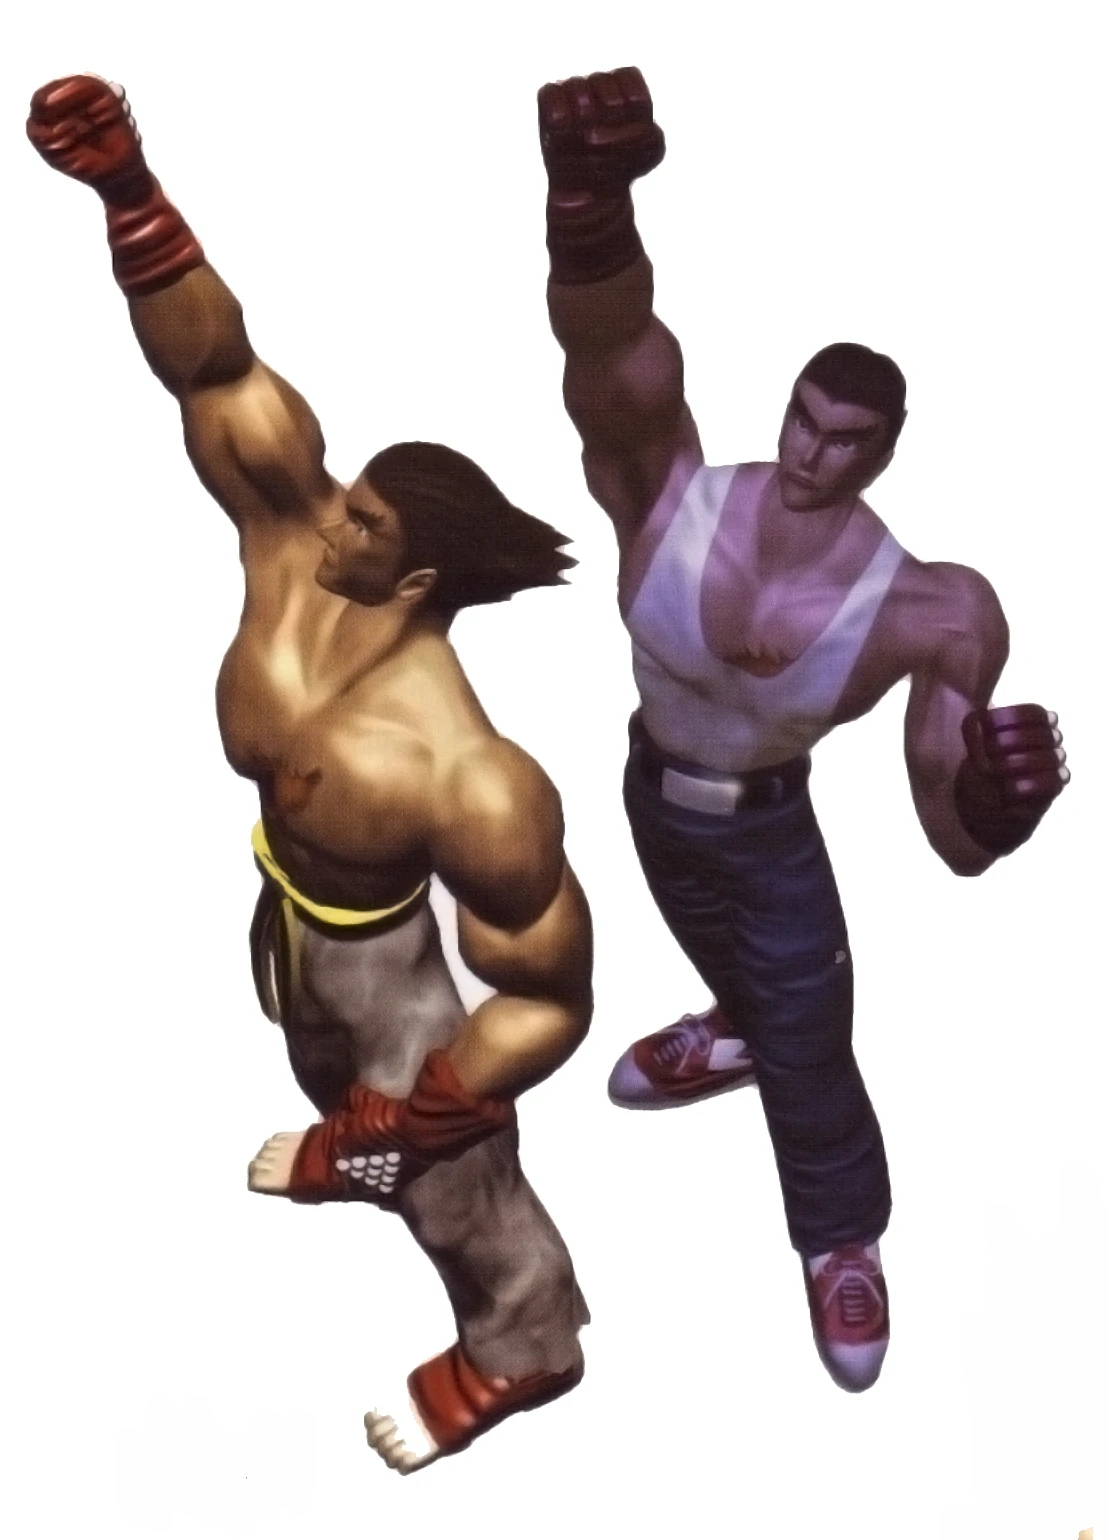 Kazuya Mishima from Virtua Fighter vs Tekken spritesheets